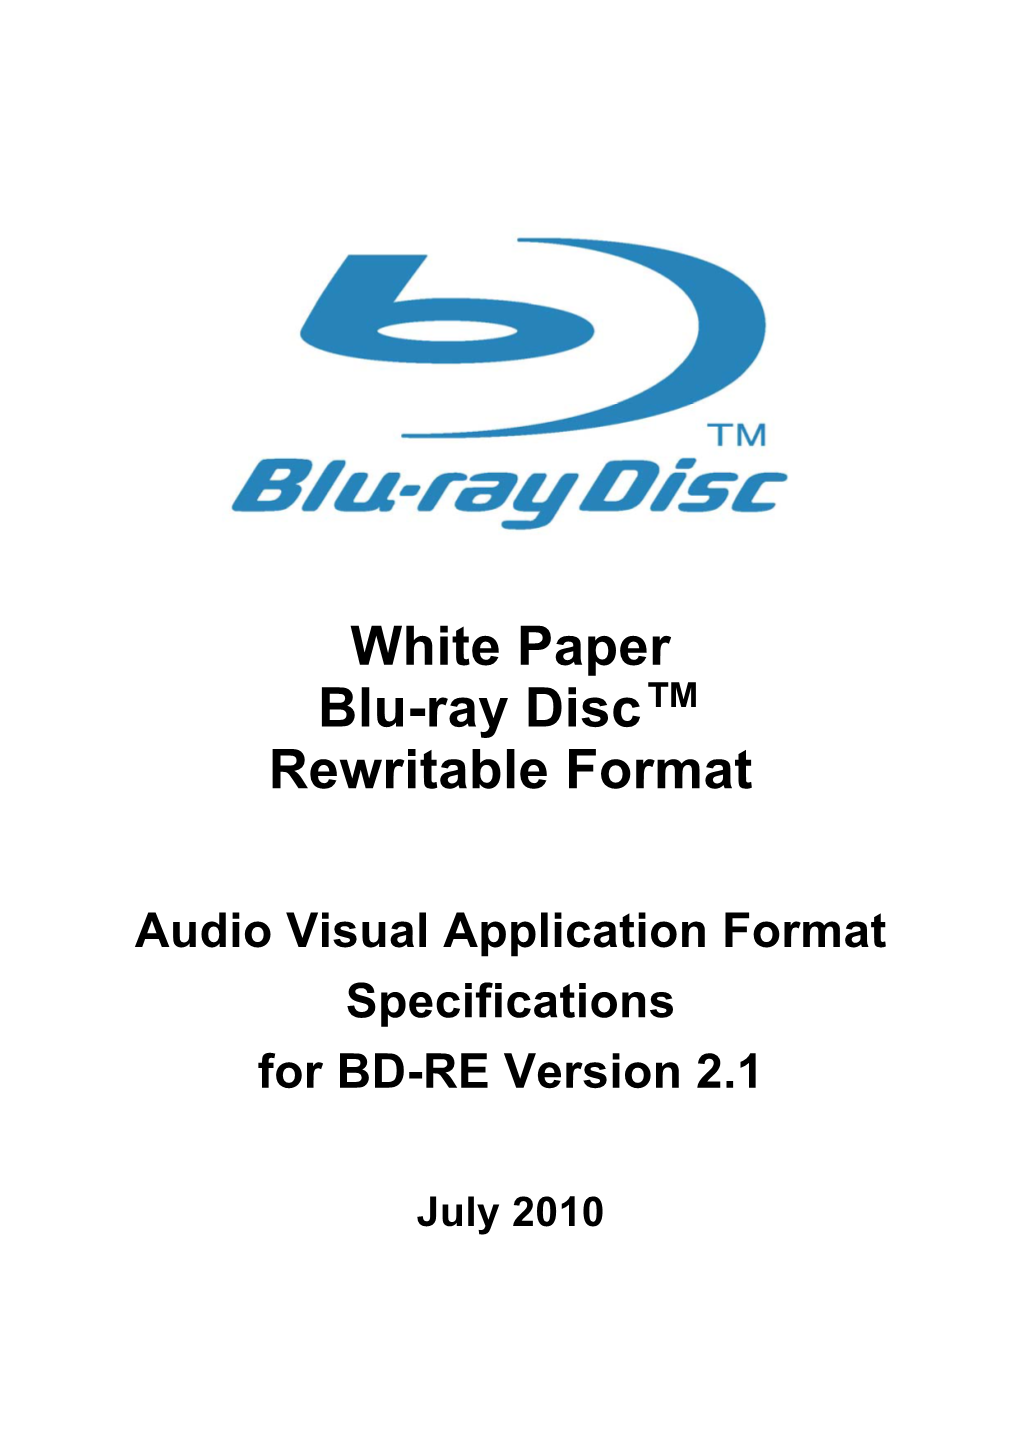 BD-RE Part3 V2.1 White Paper